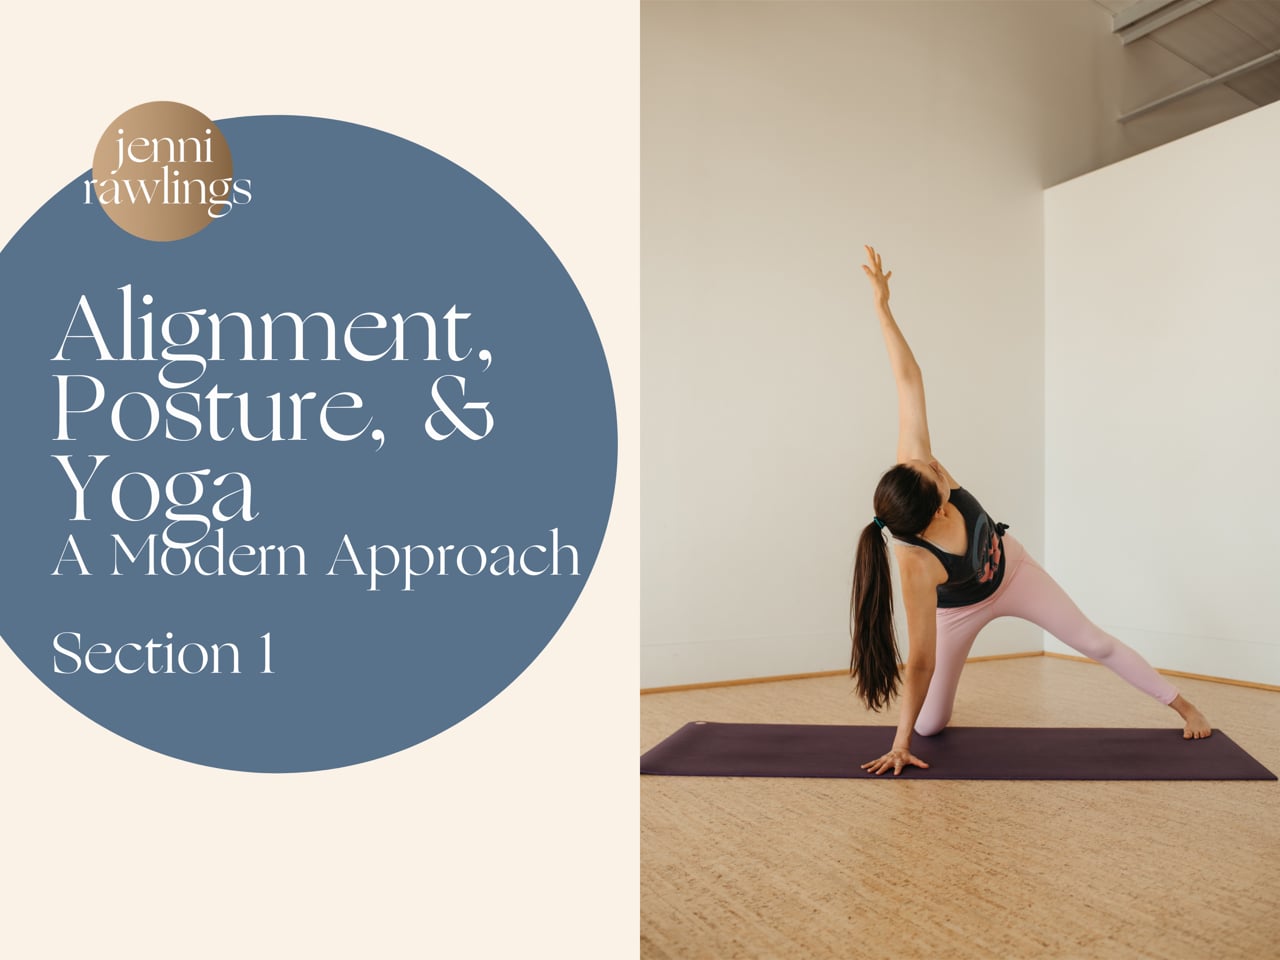 Section 1 – Alignment, Posture, & Yoga